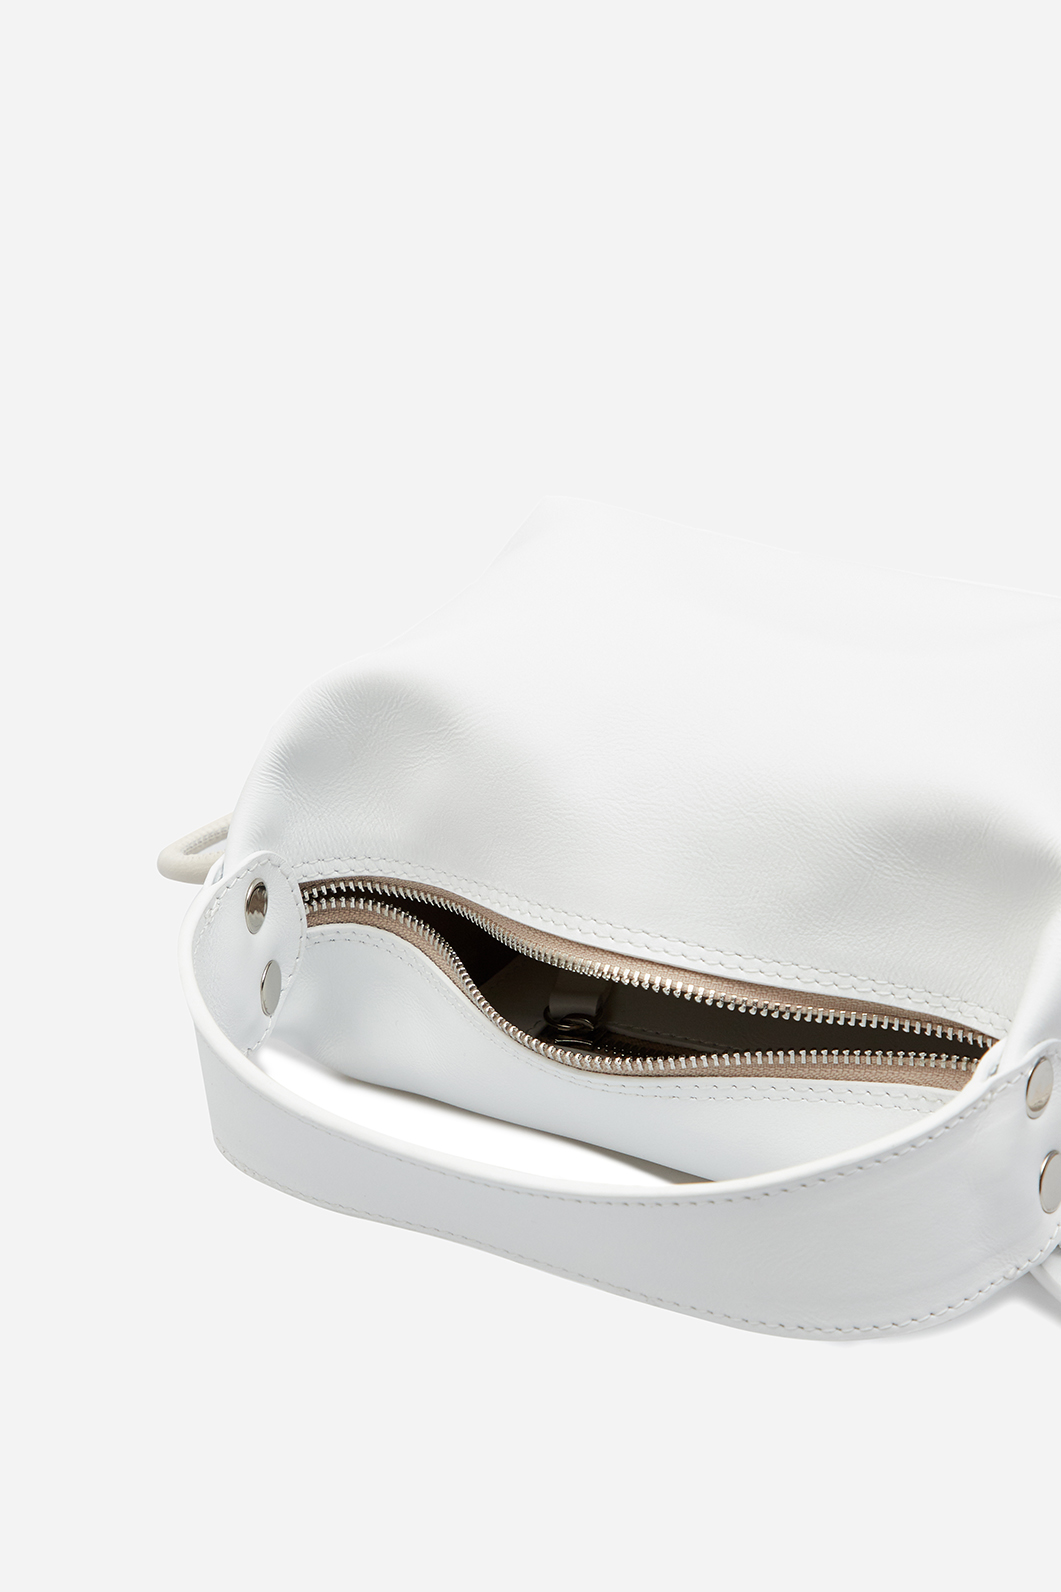 Selma micro white leather
bag /silver/